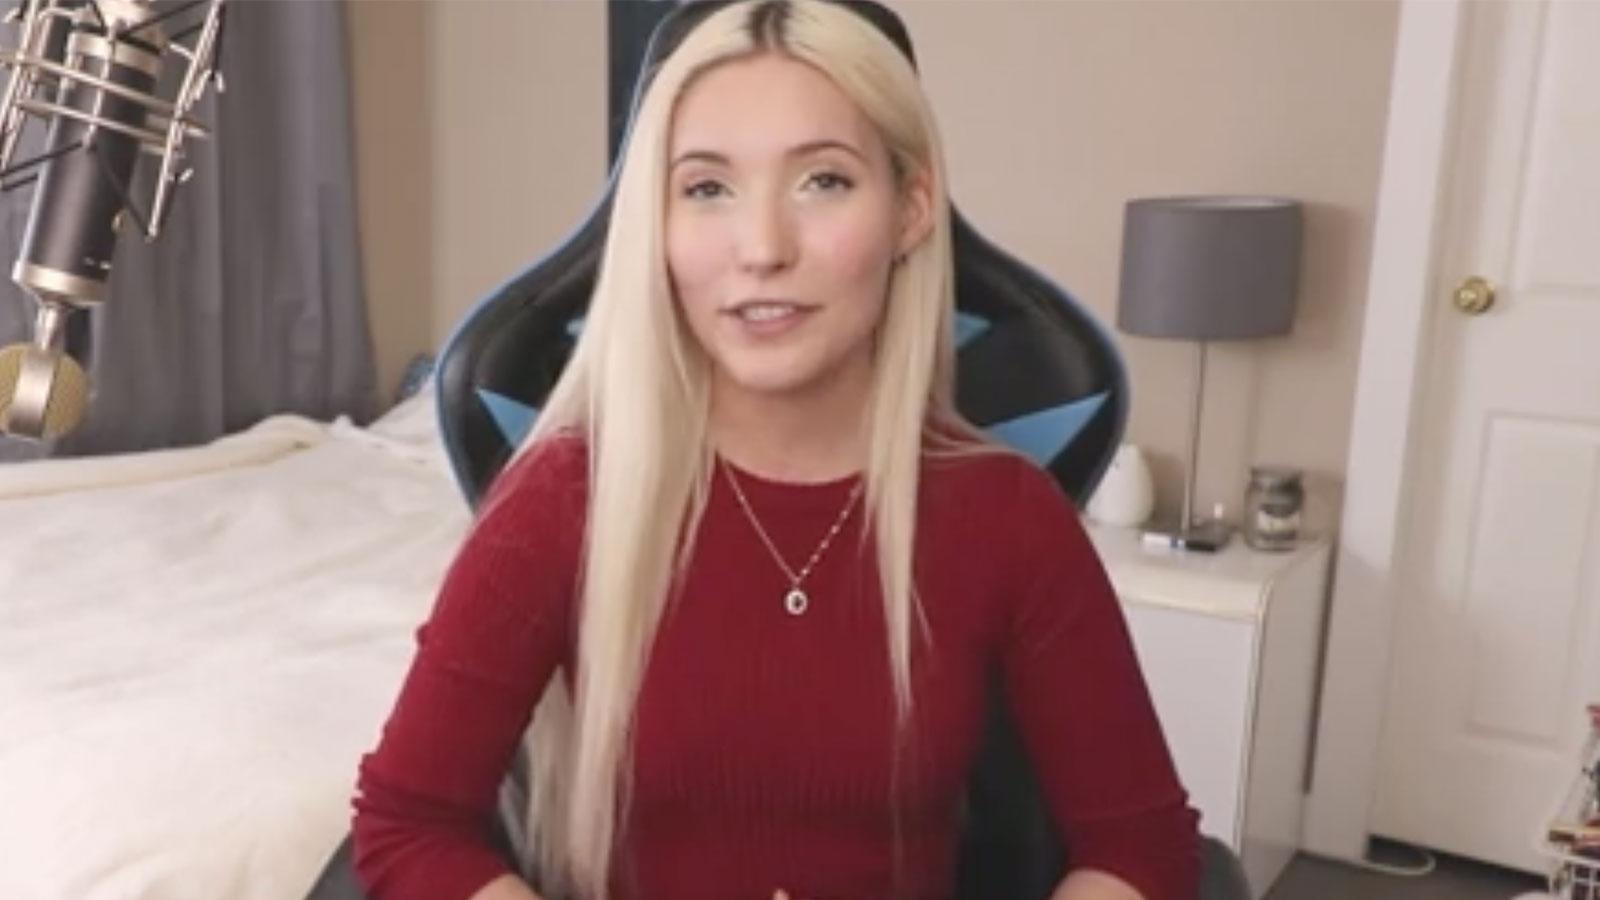 An image of Twitch streamer Jenna talking.